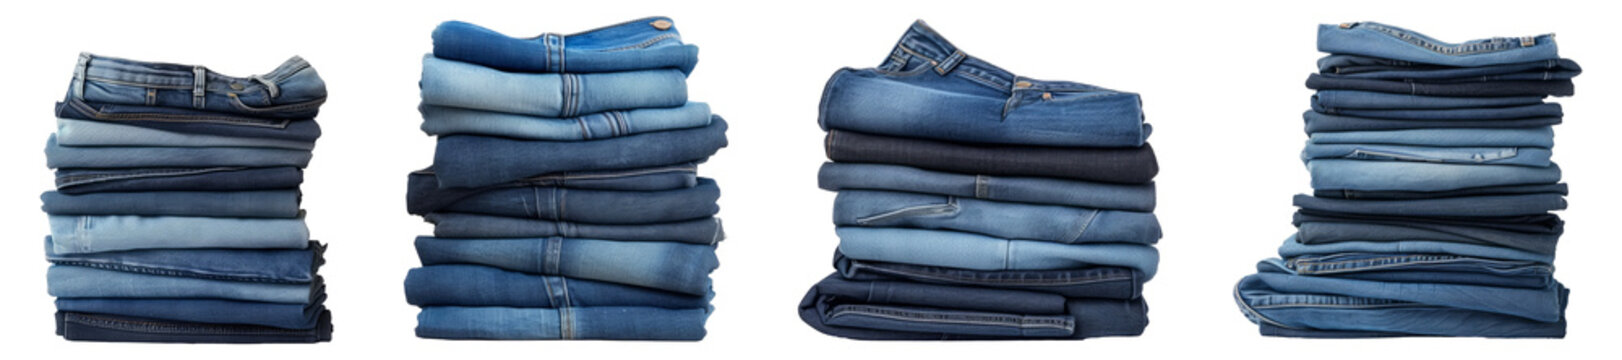 stack of different kind of blue jeans, on Transparent background
